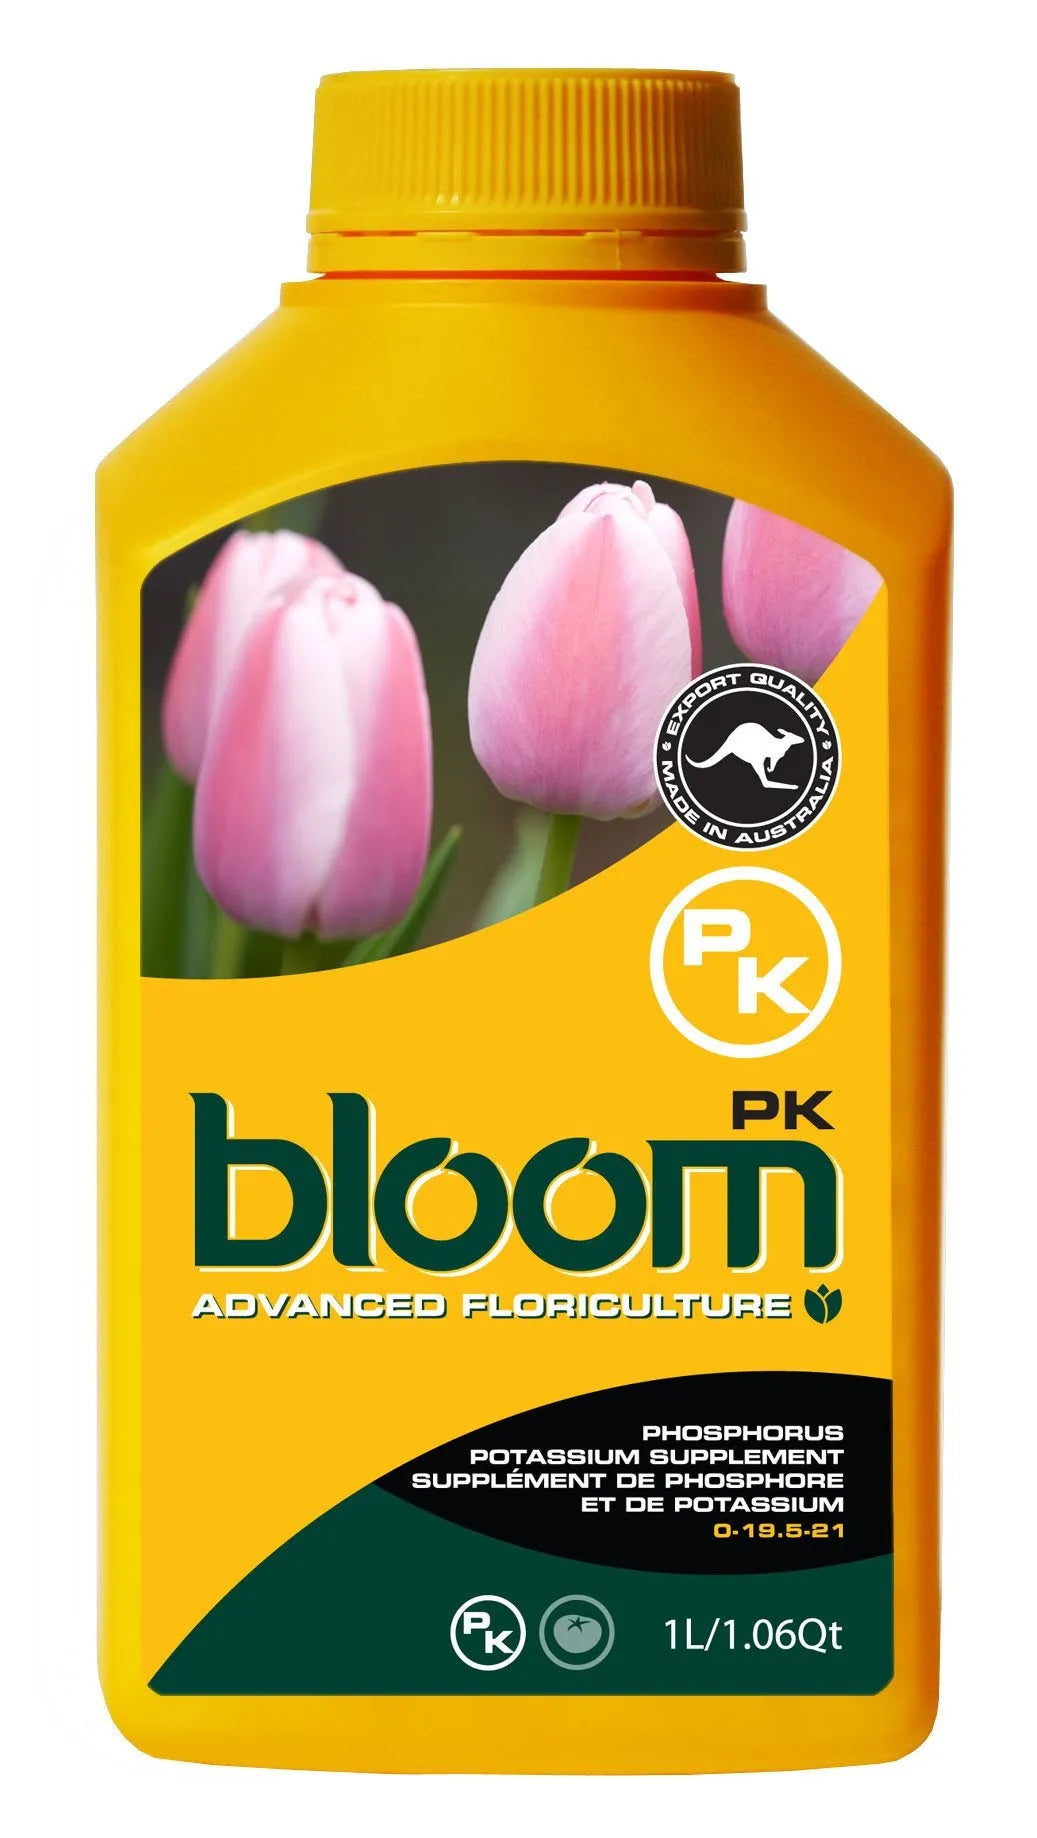 Bloom Yellow Bottle - PK